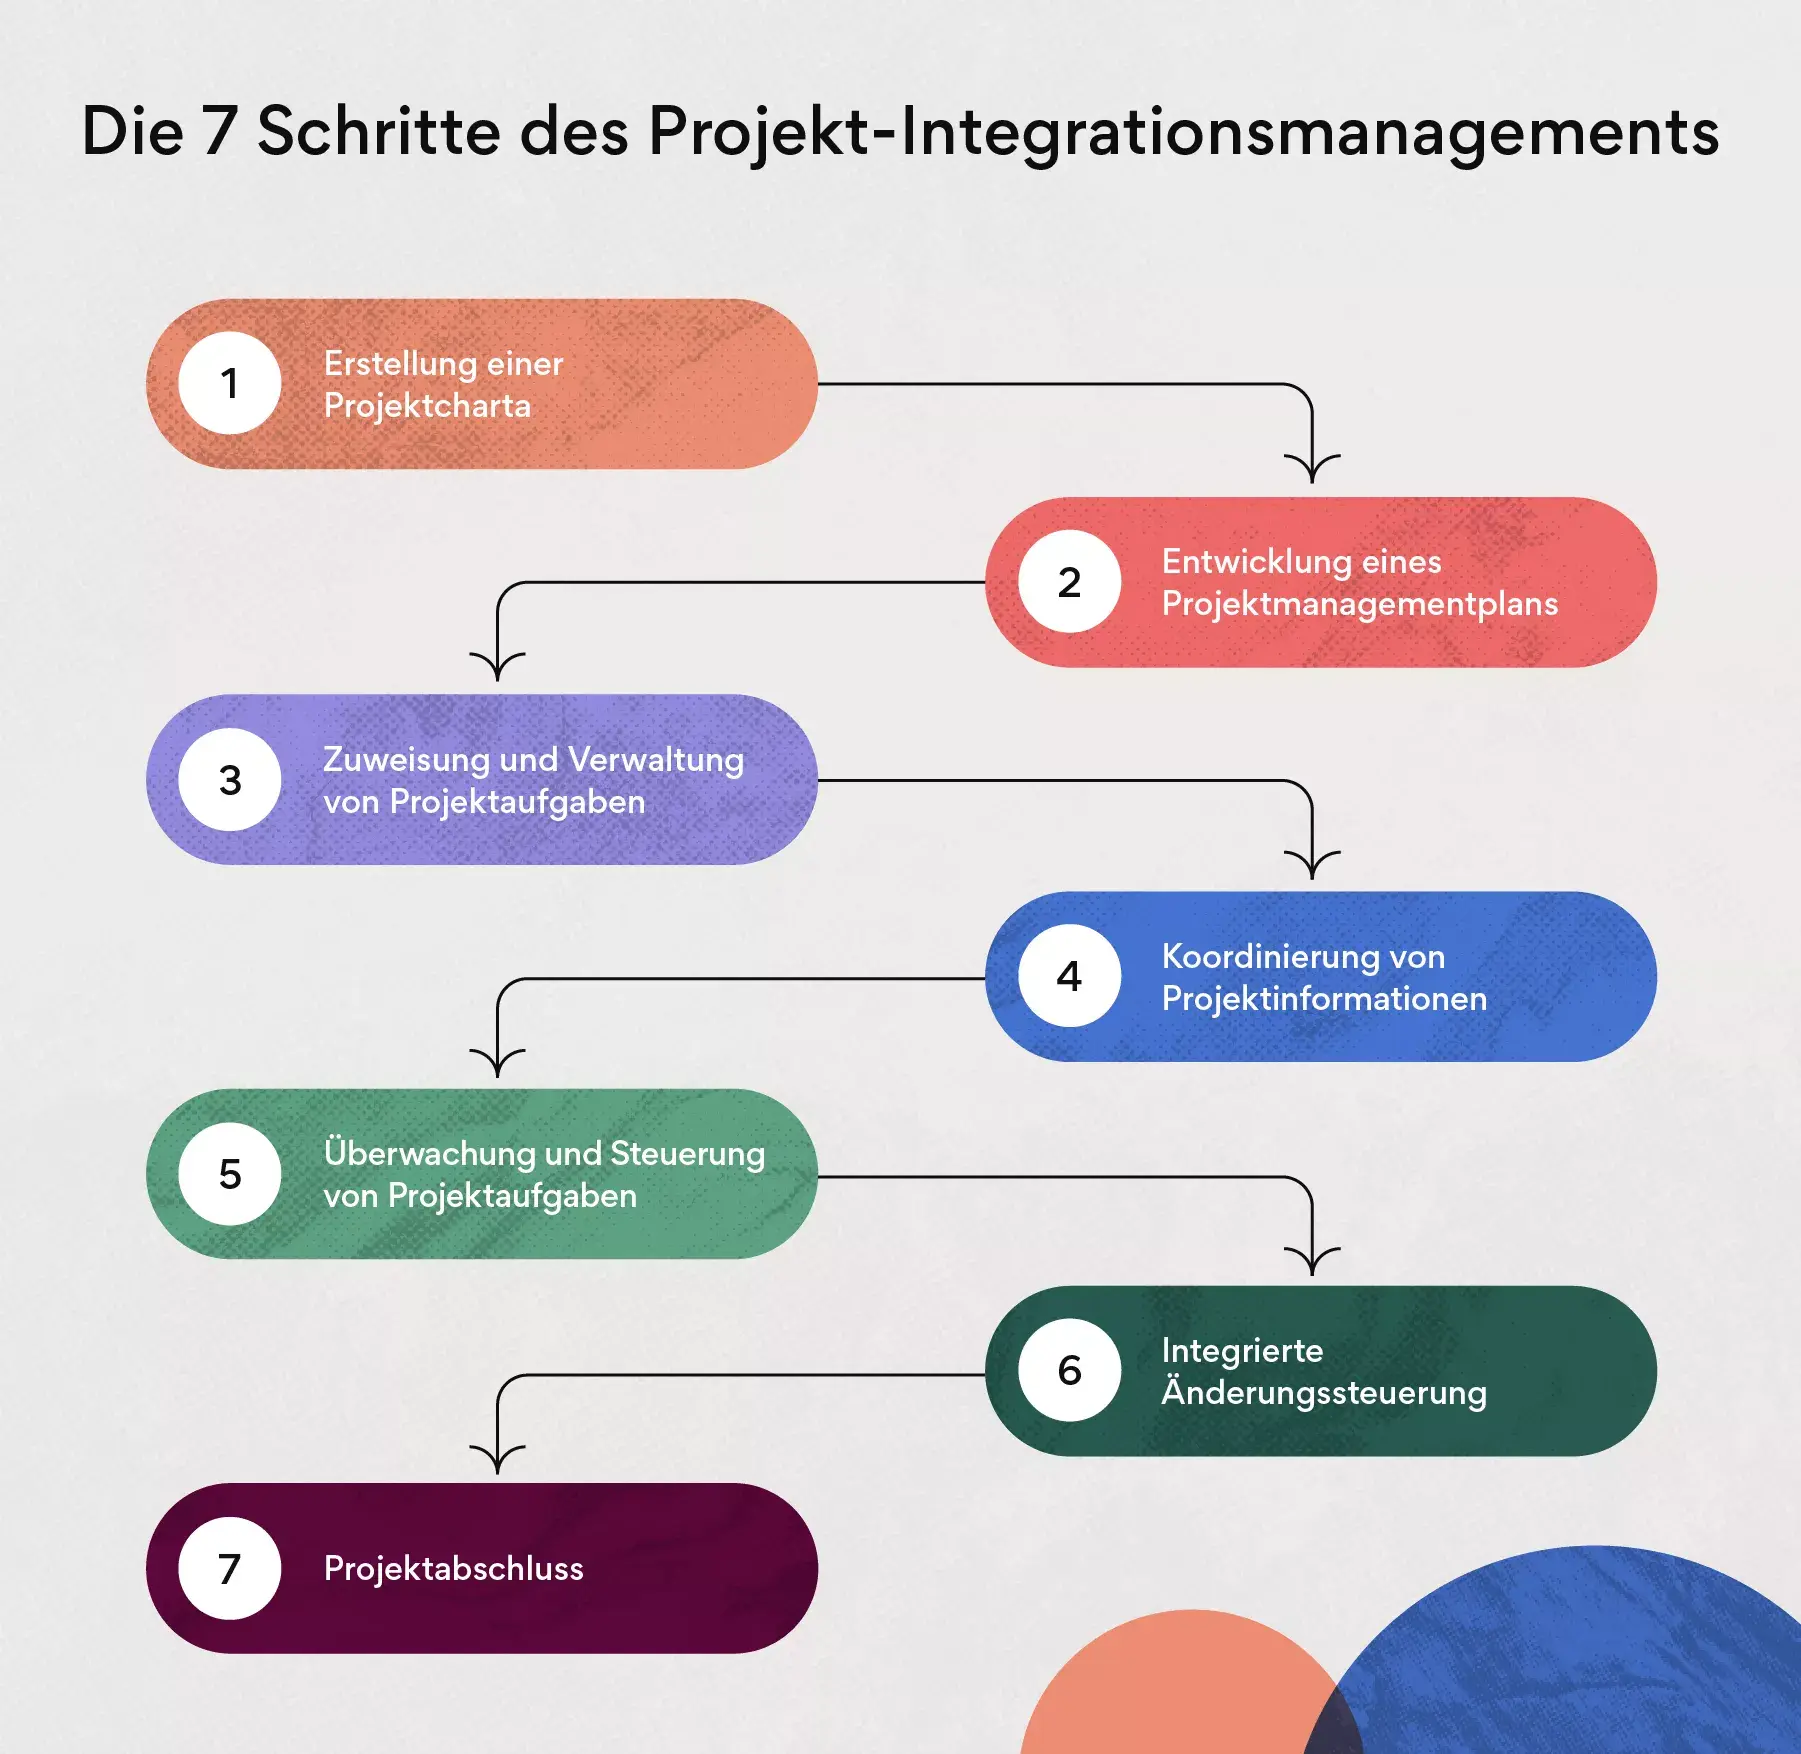 Die 7 Schritte des Projektintegrationsmanagements